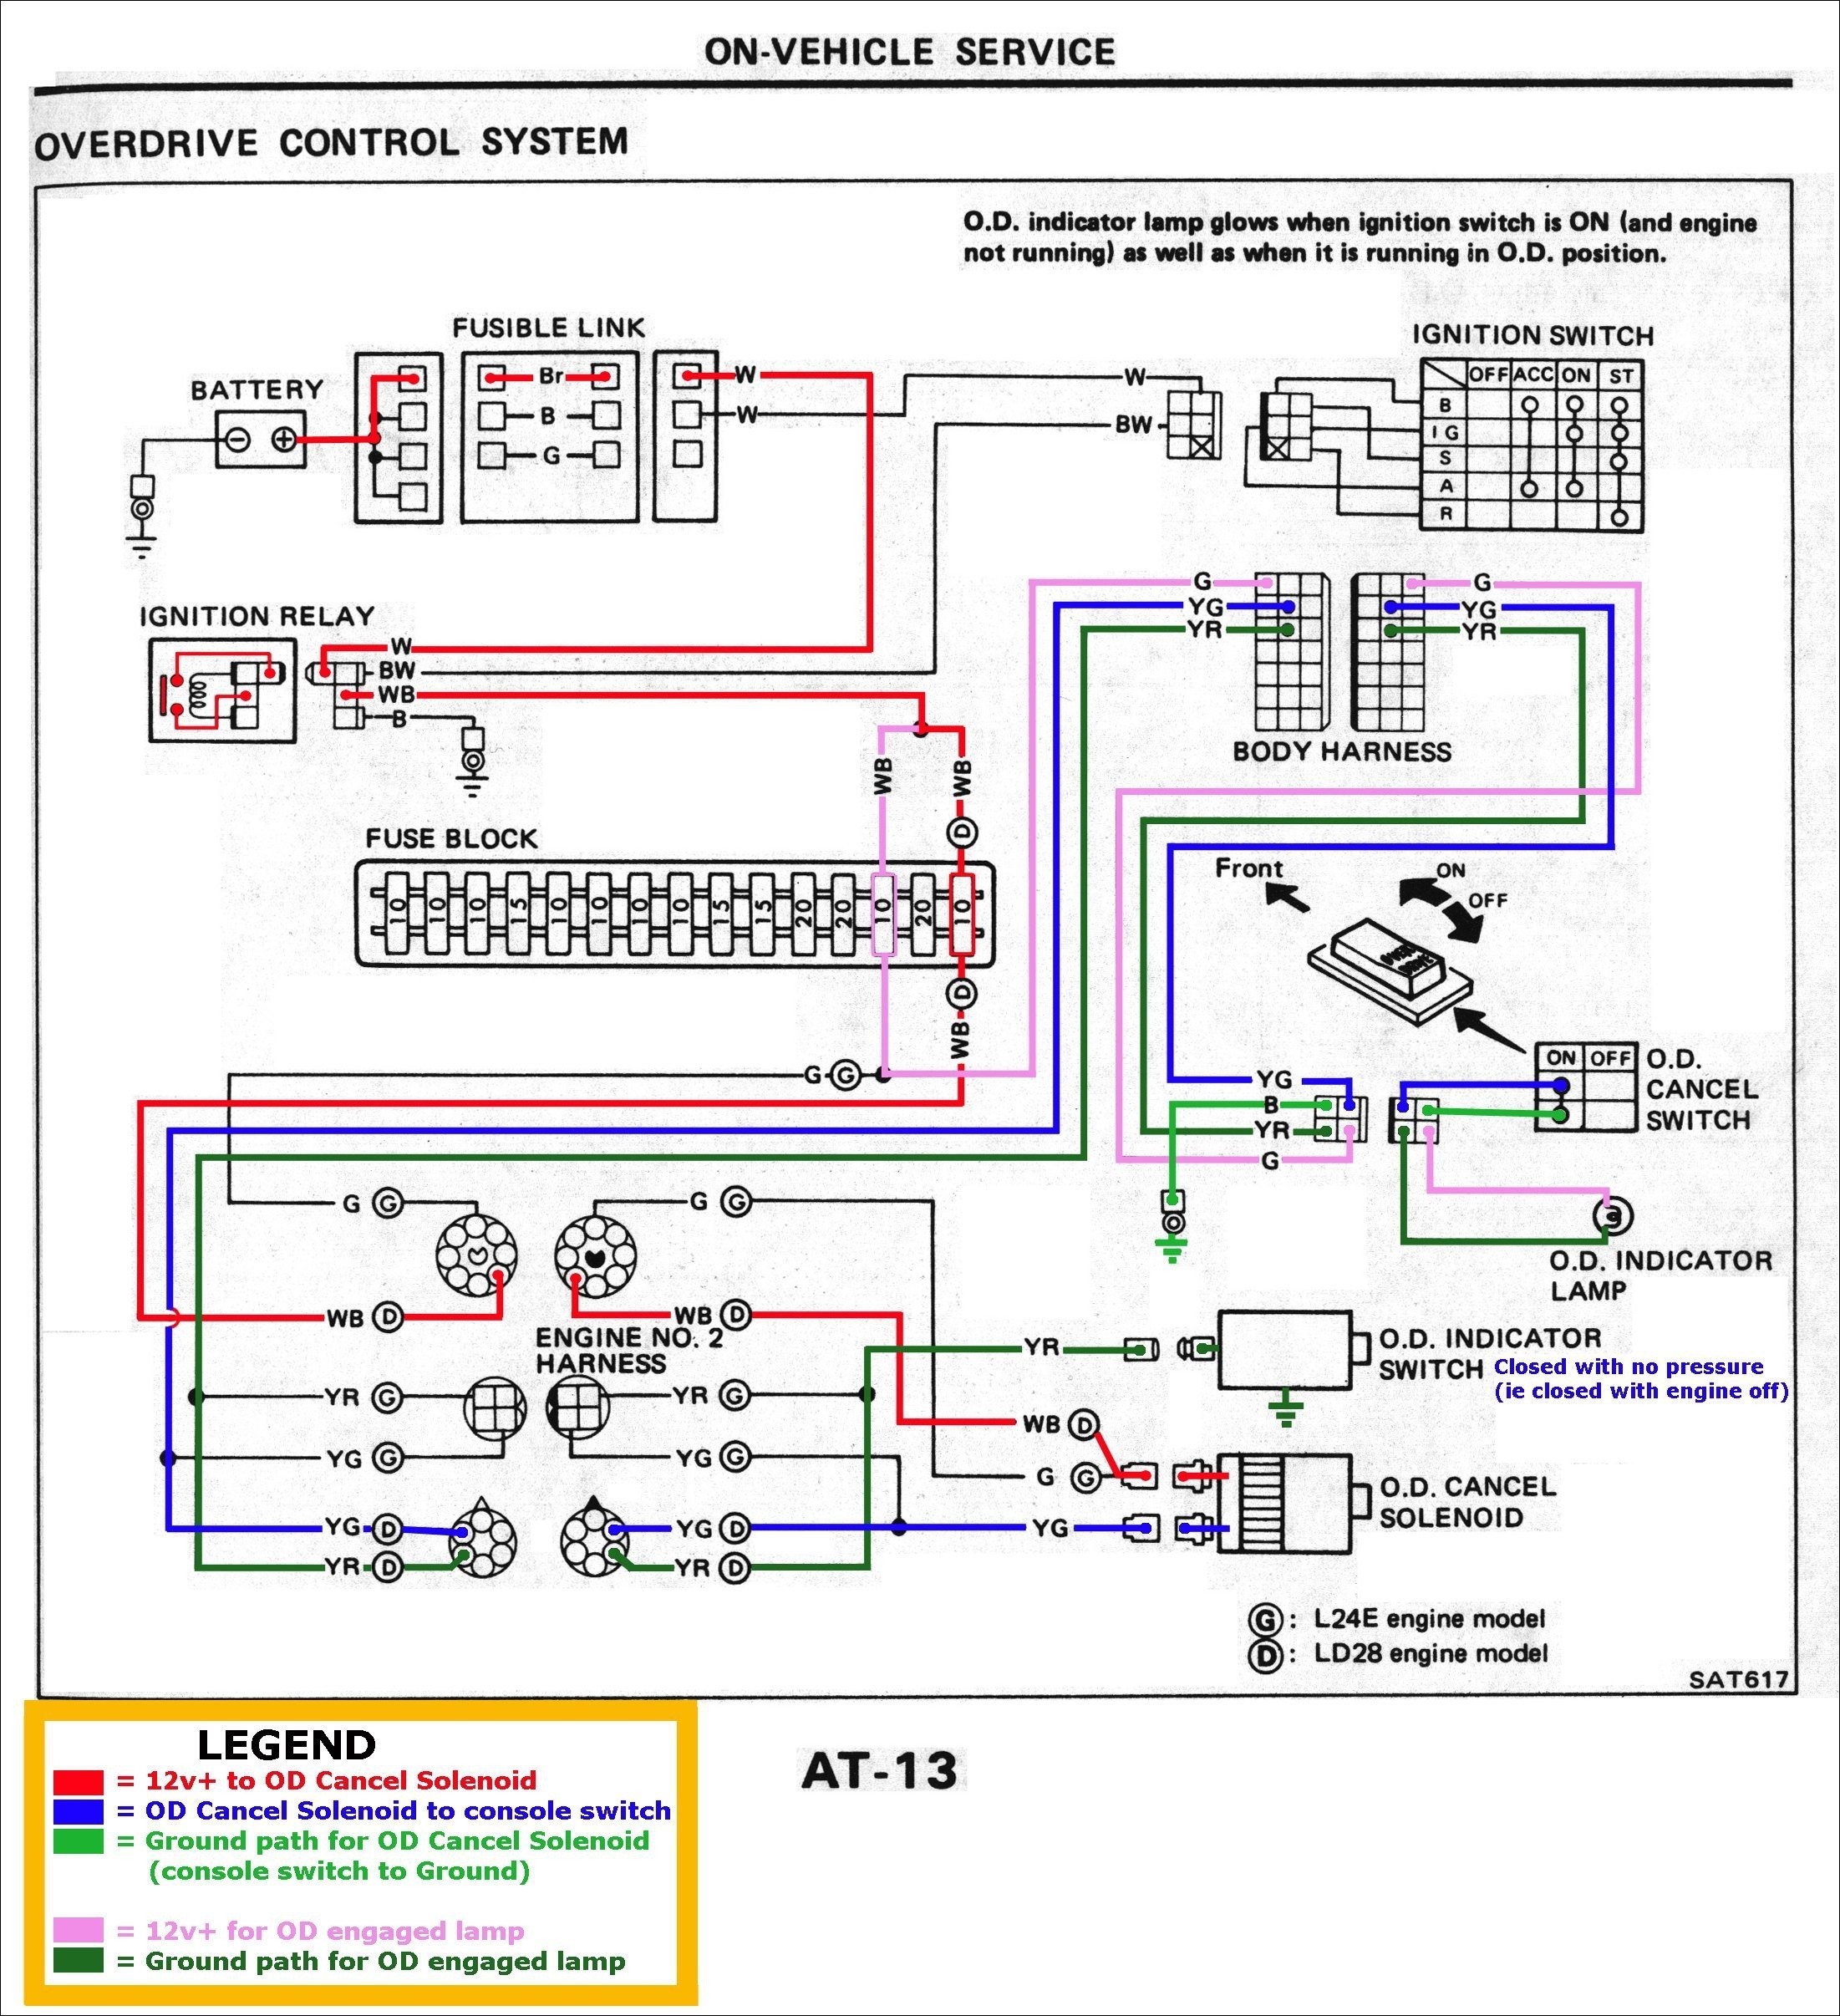 Nissan Altima Wiring Diagram Nissan Altima Wiring Diagram Luxury Maxxima Light Wiring Diagram Nissan Altima